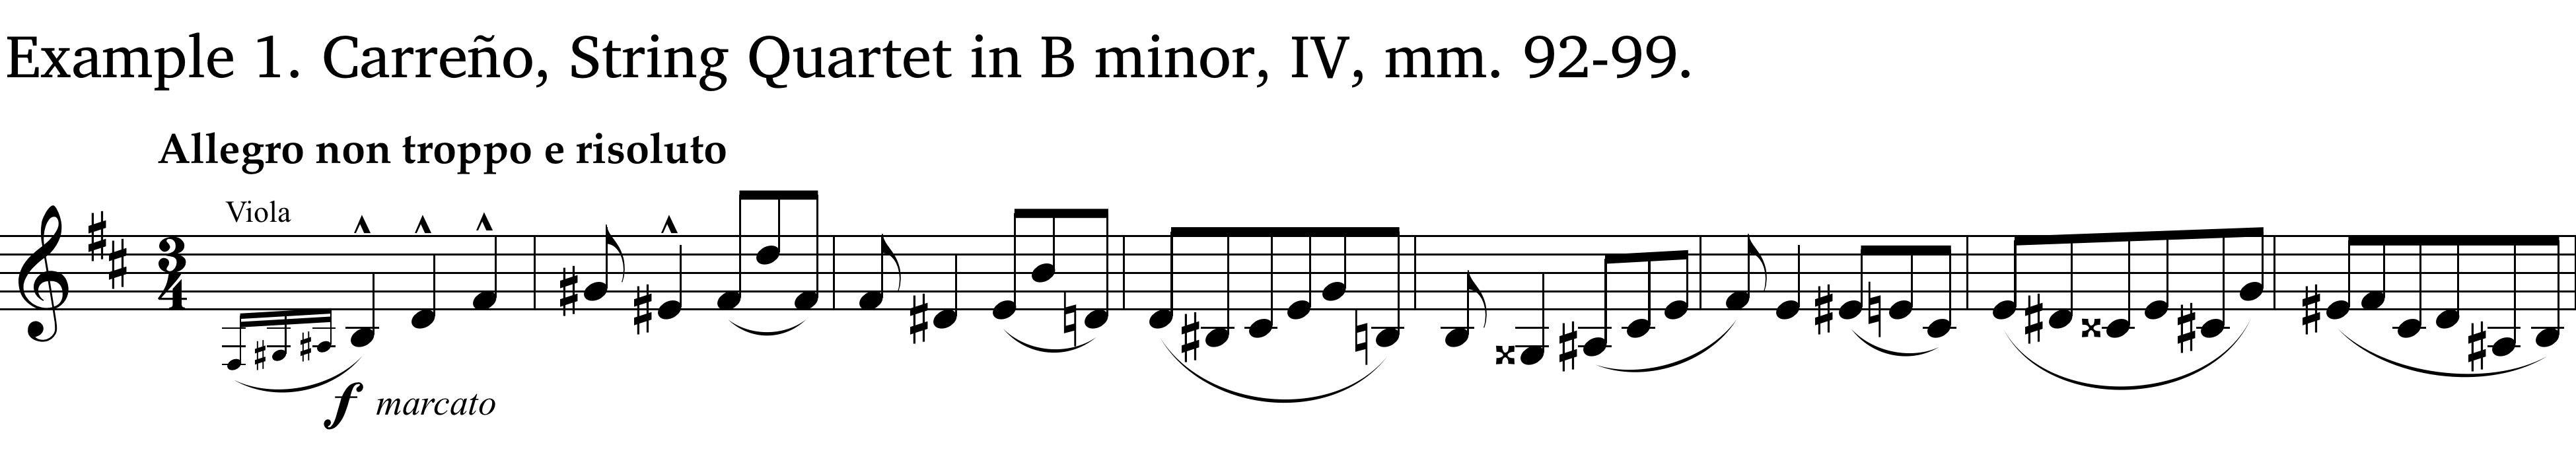 Example 1, Carreño Quartet